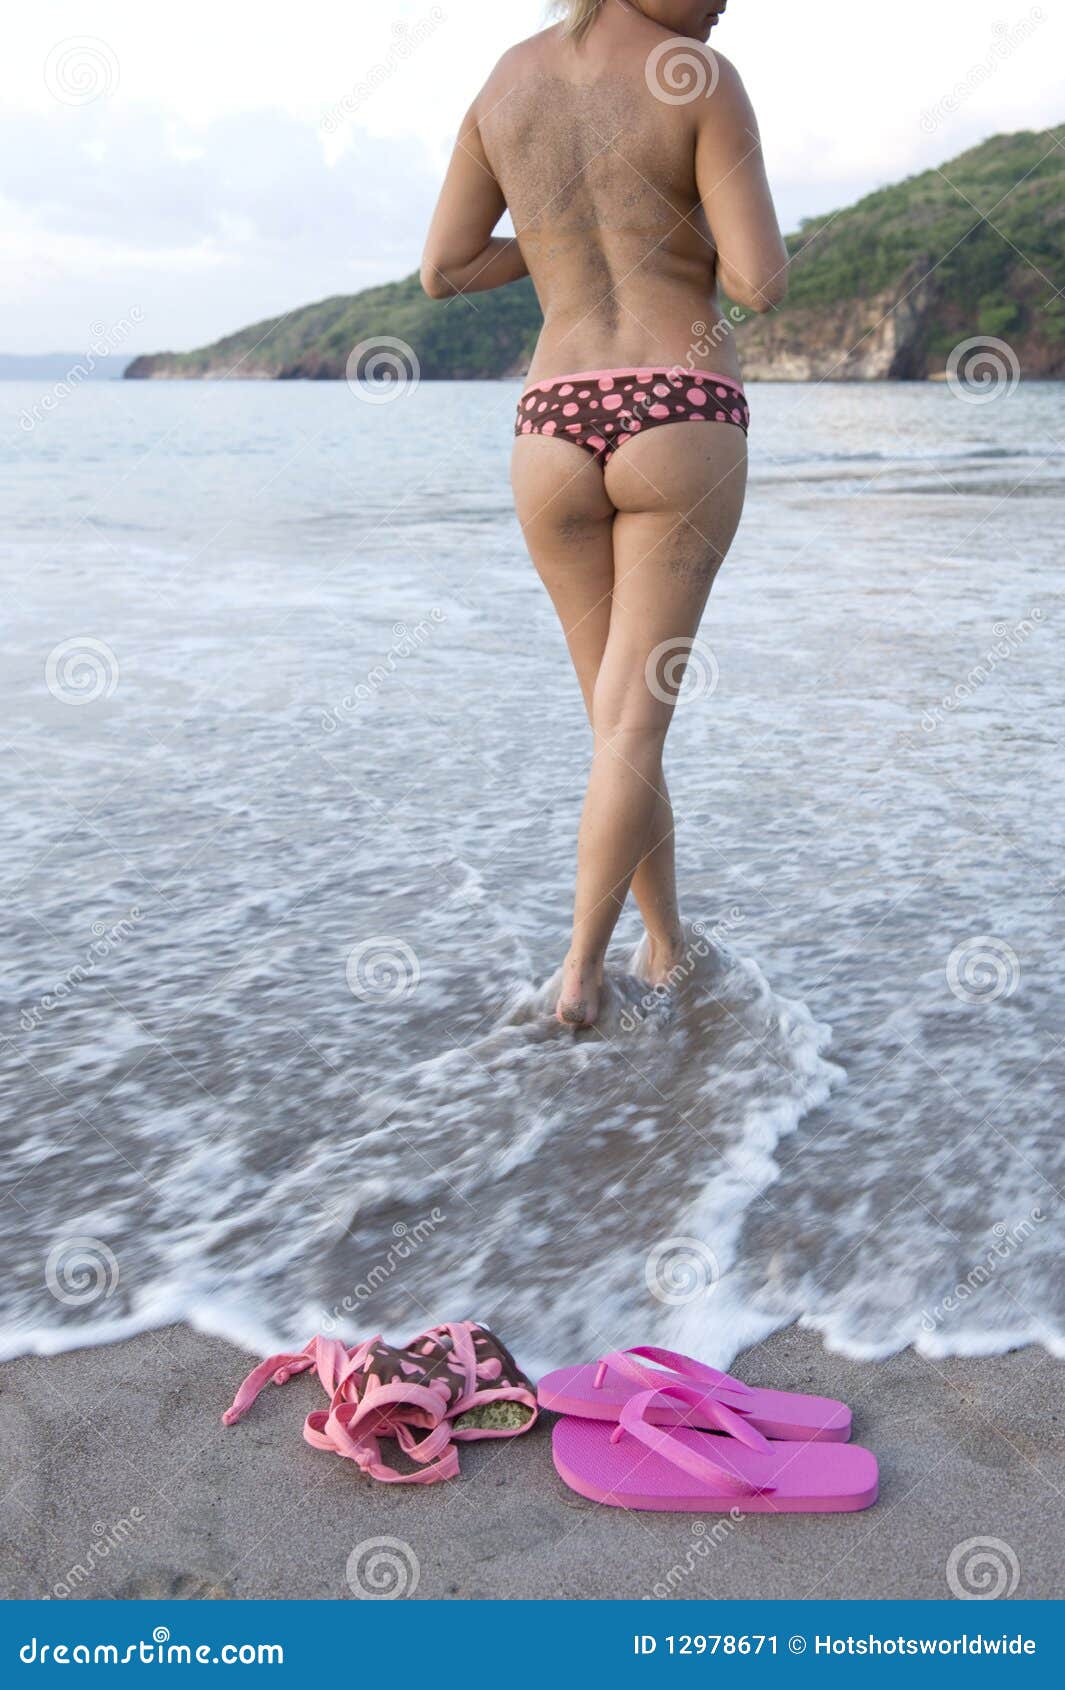 costa rica topless beach